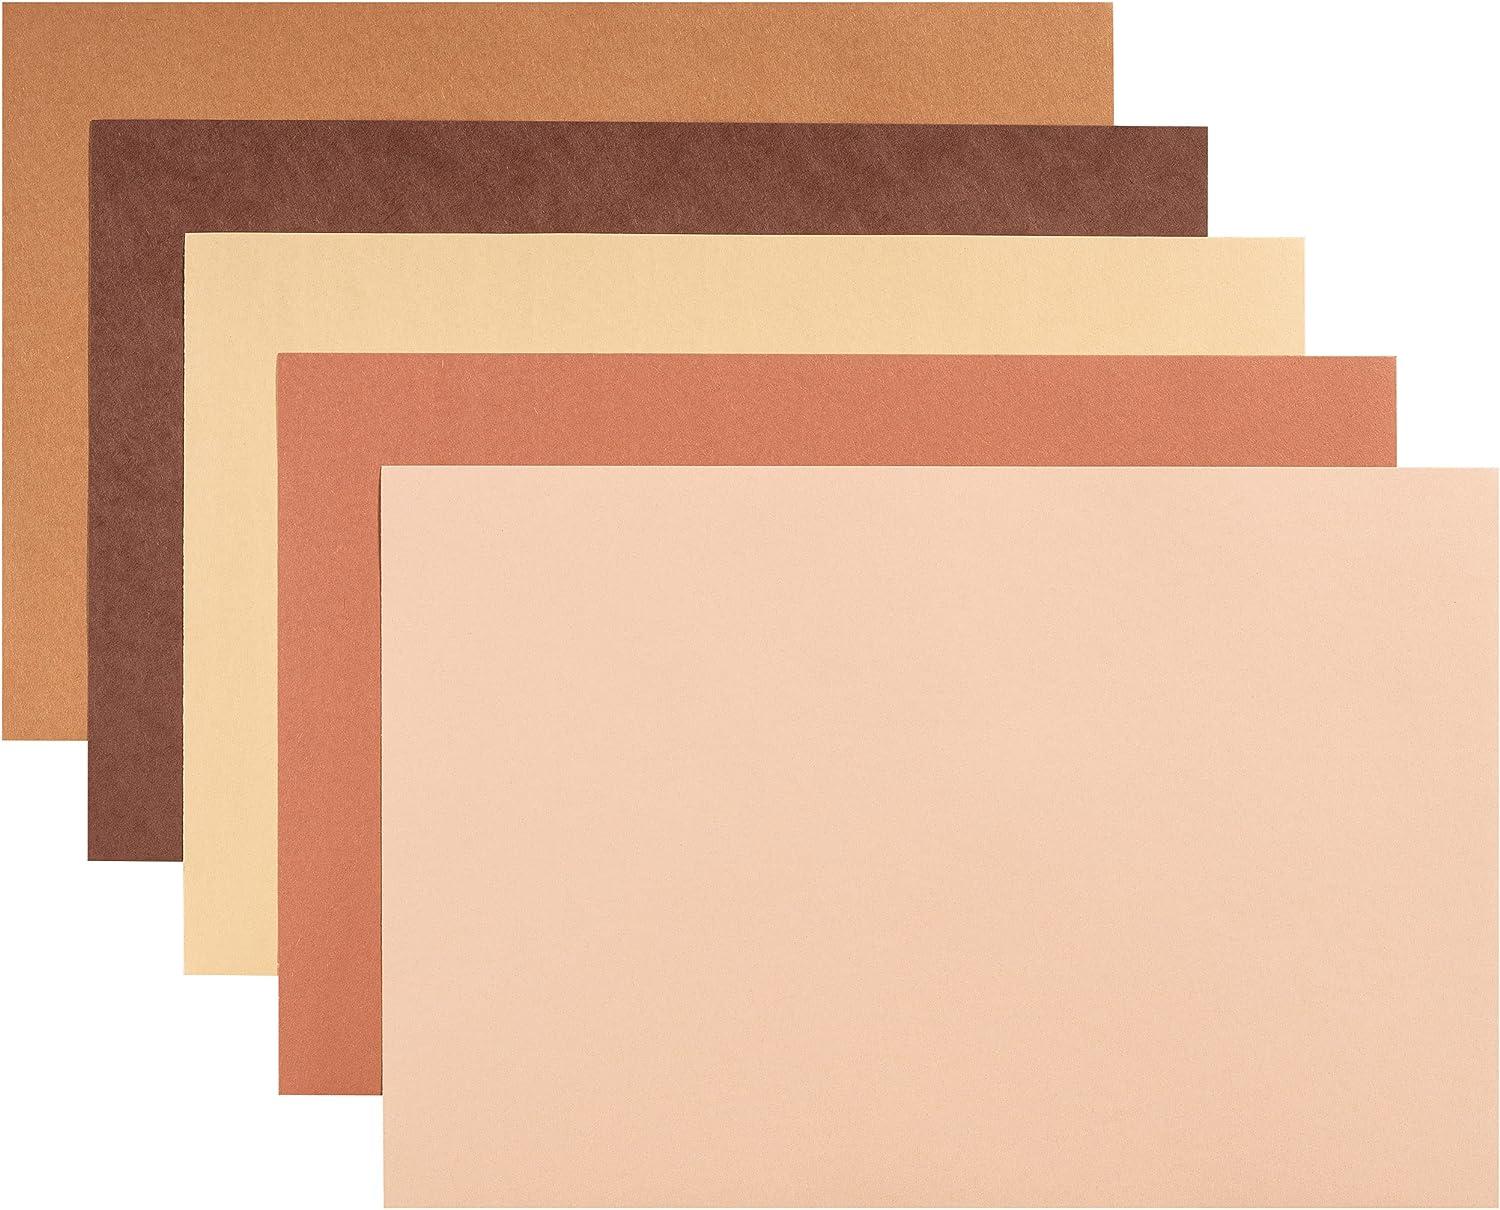 SunWorks Construction Paper, 10 Assorted Colors - 50 sheets